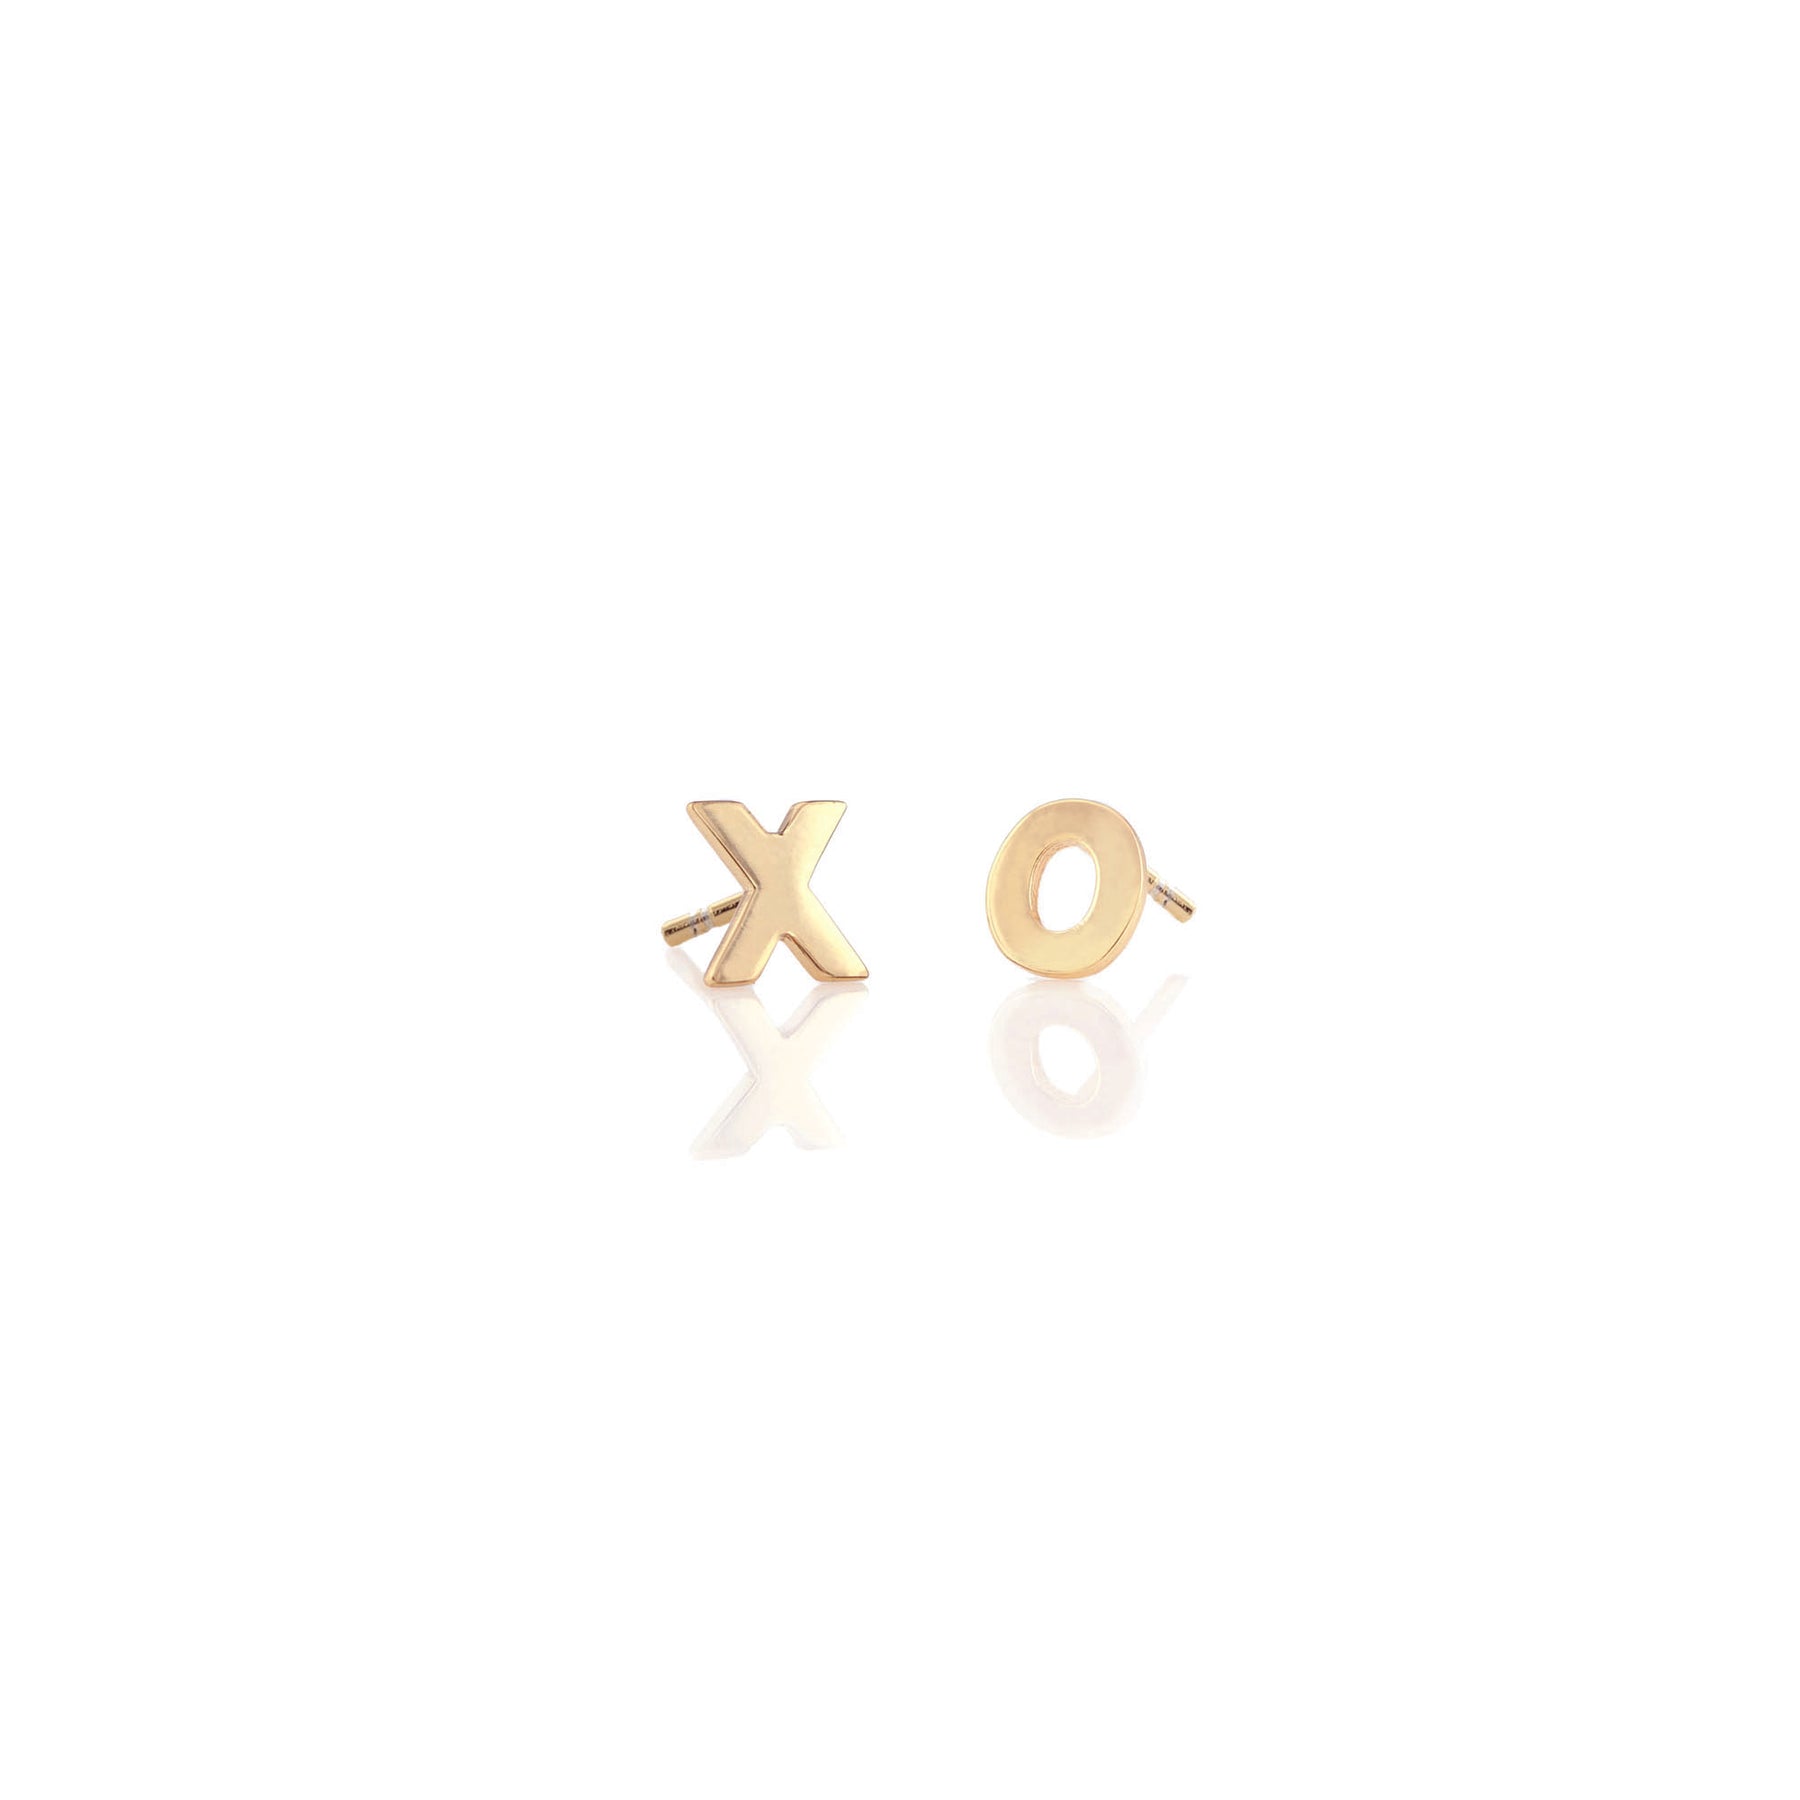 XO Stud Earrings - Gold Vermeil or Sterling Silver